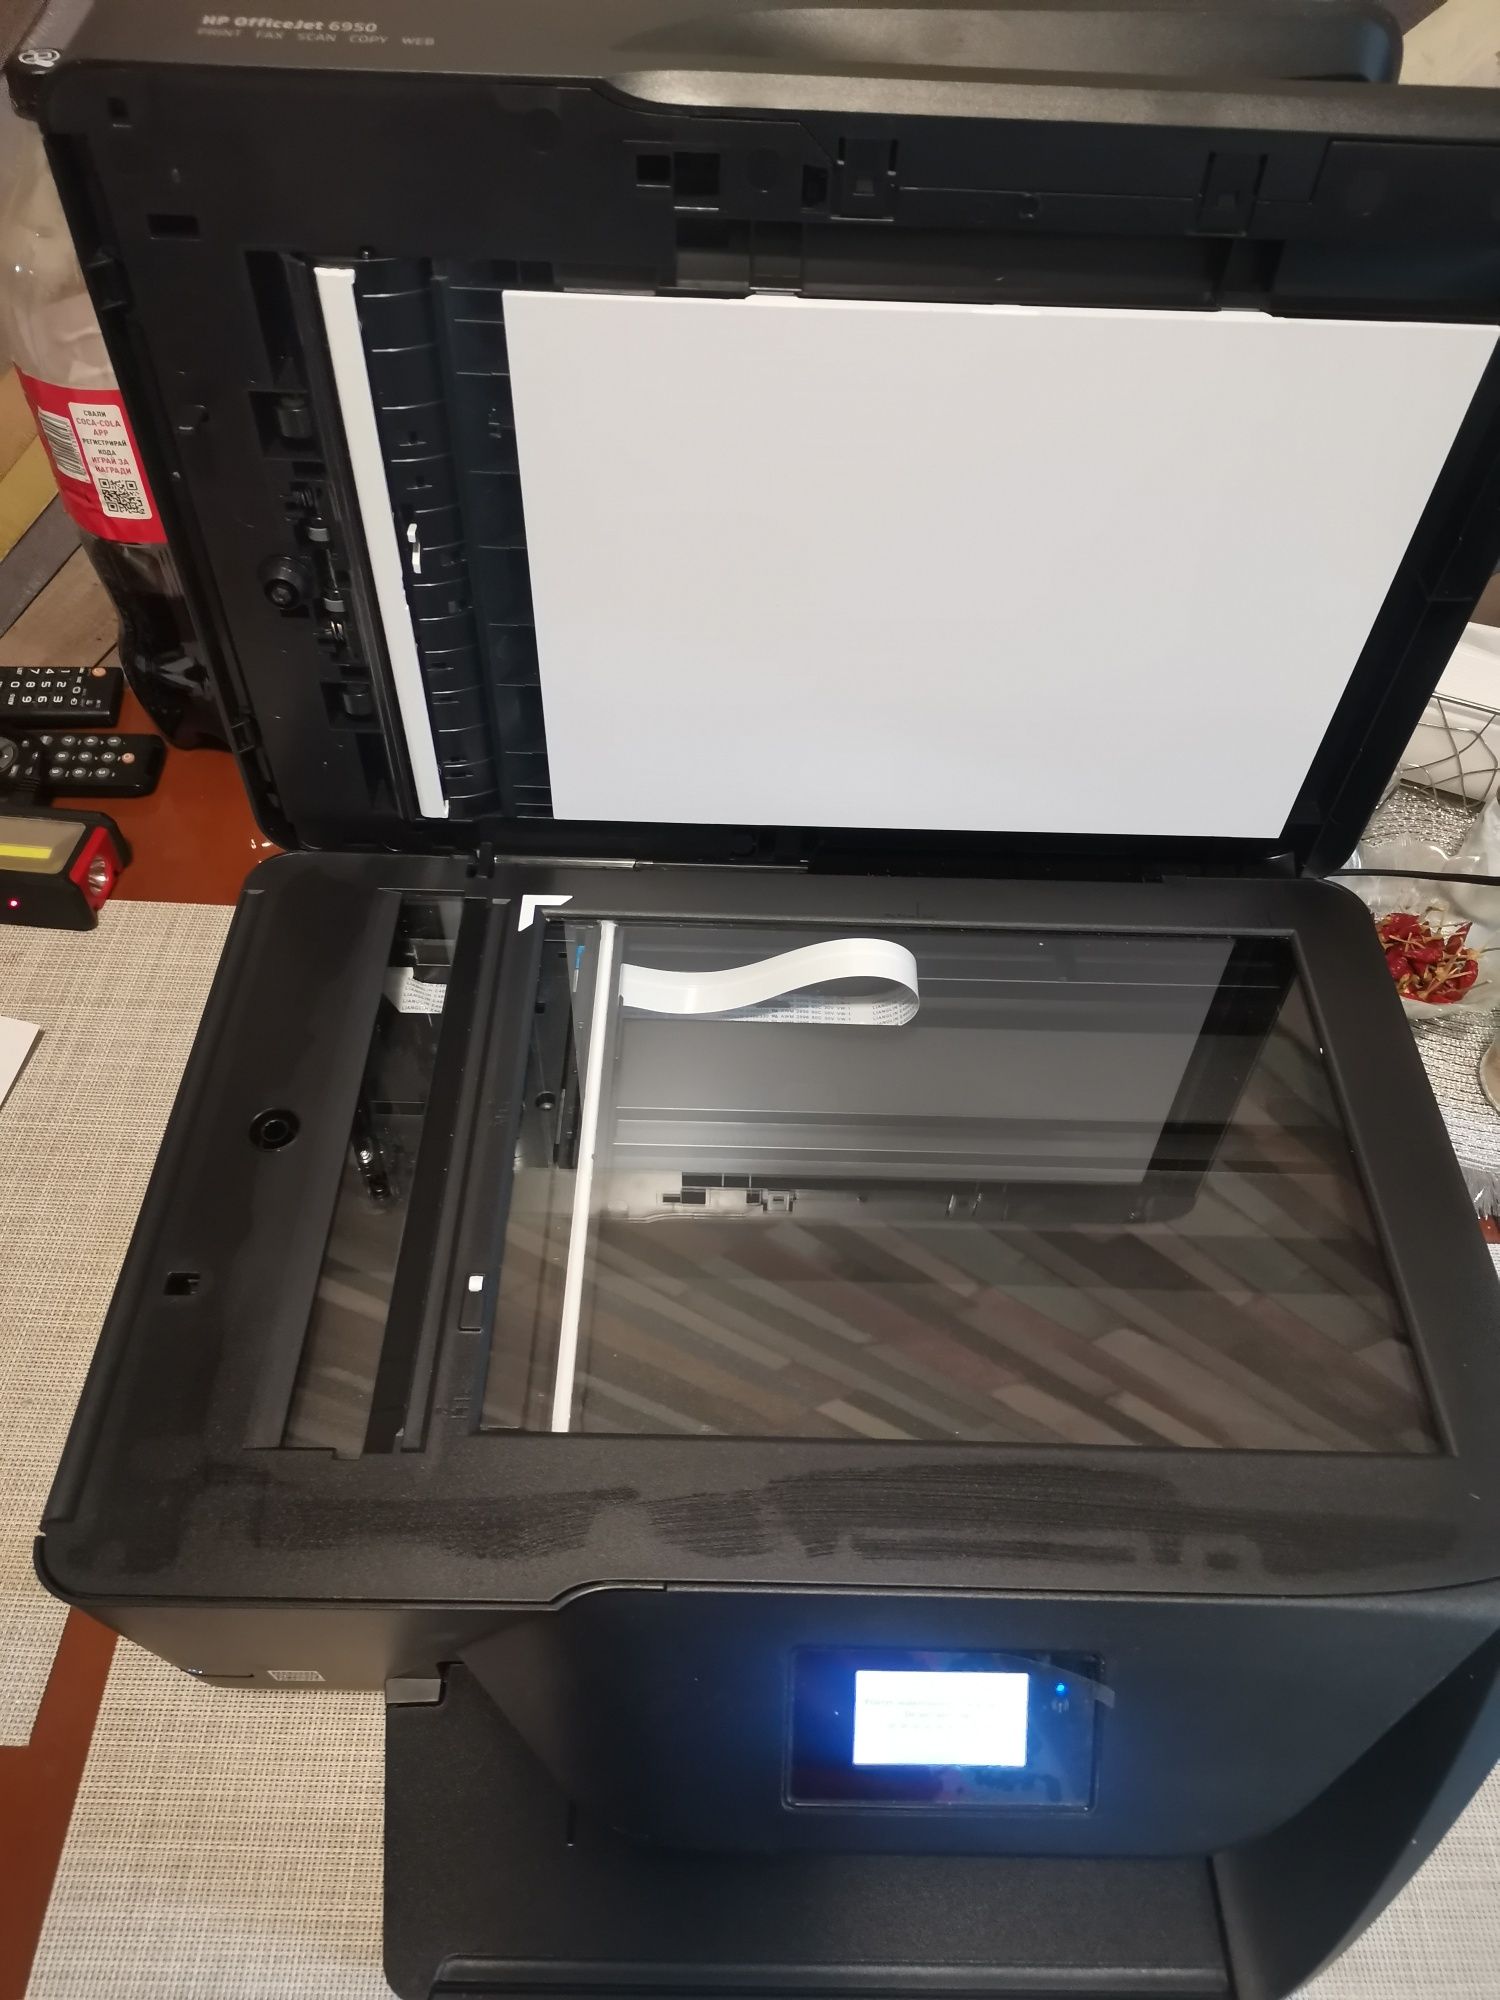 Принтер скенер копира HP officejet 6950